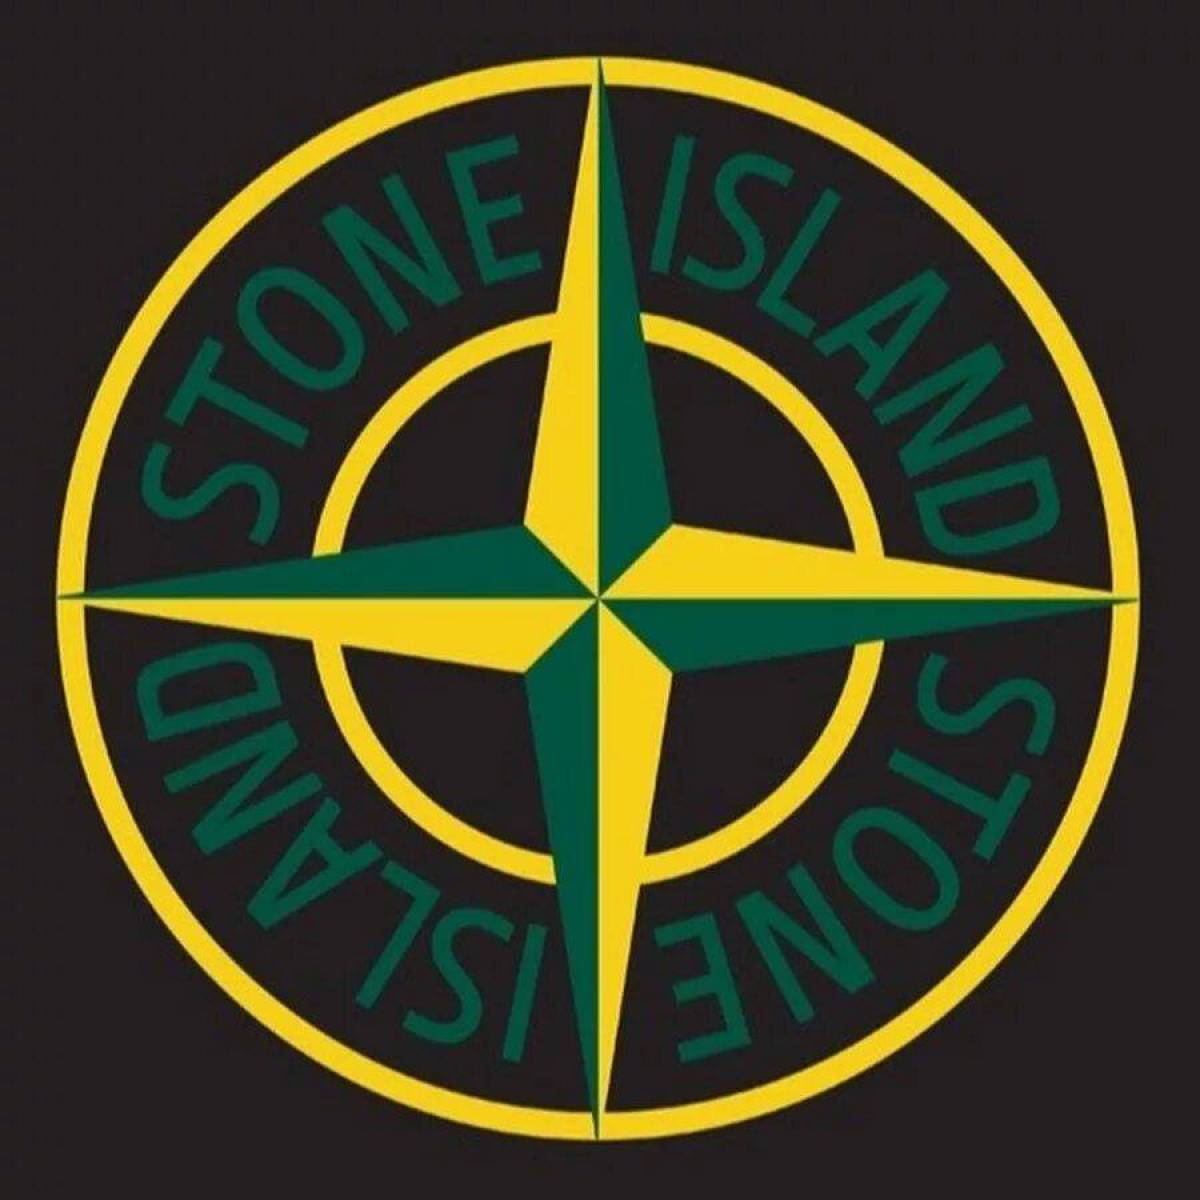 Island значок. Компас стон Айленд. Stone Island компас. Stone Island логотип. Звезда стон Исланд.